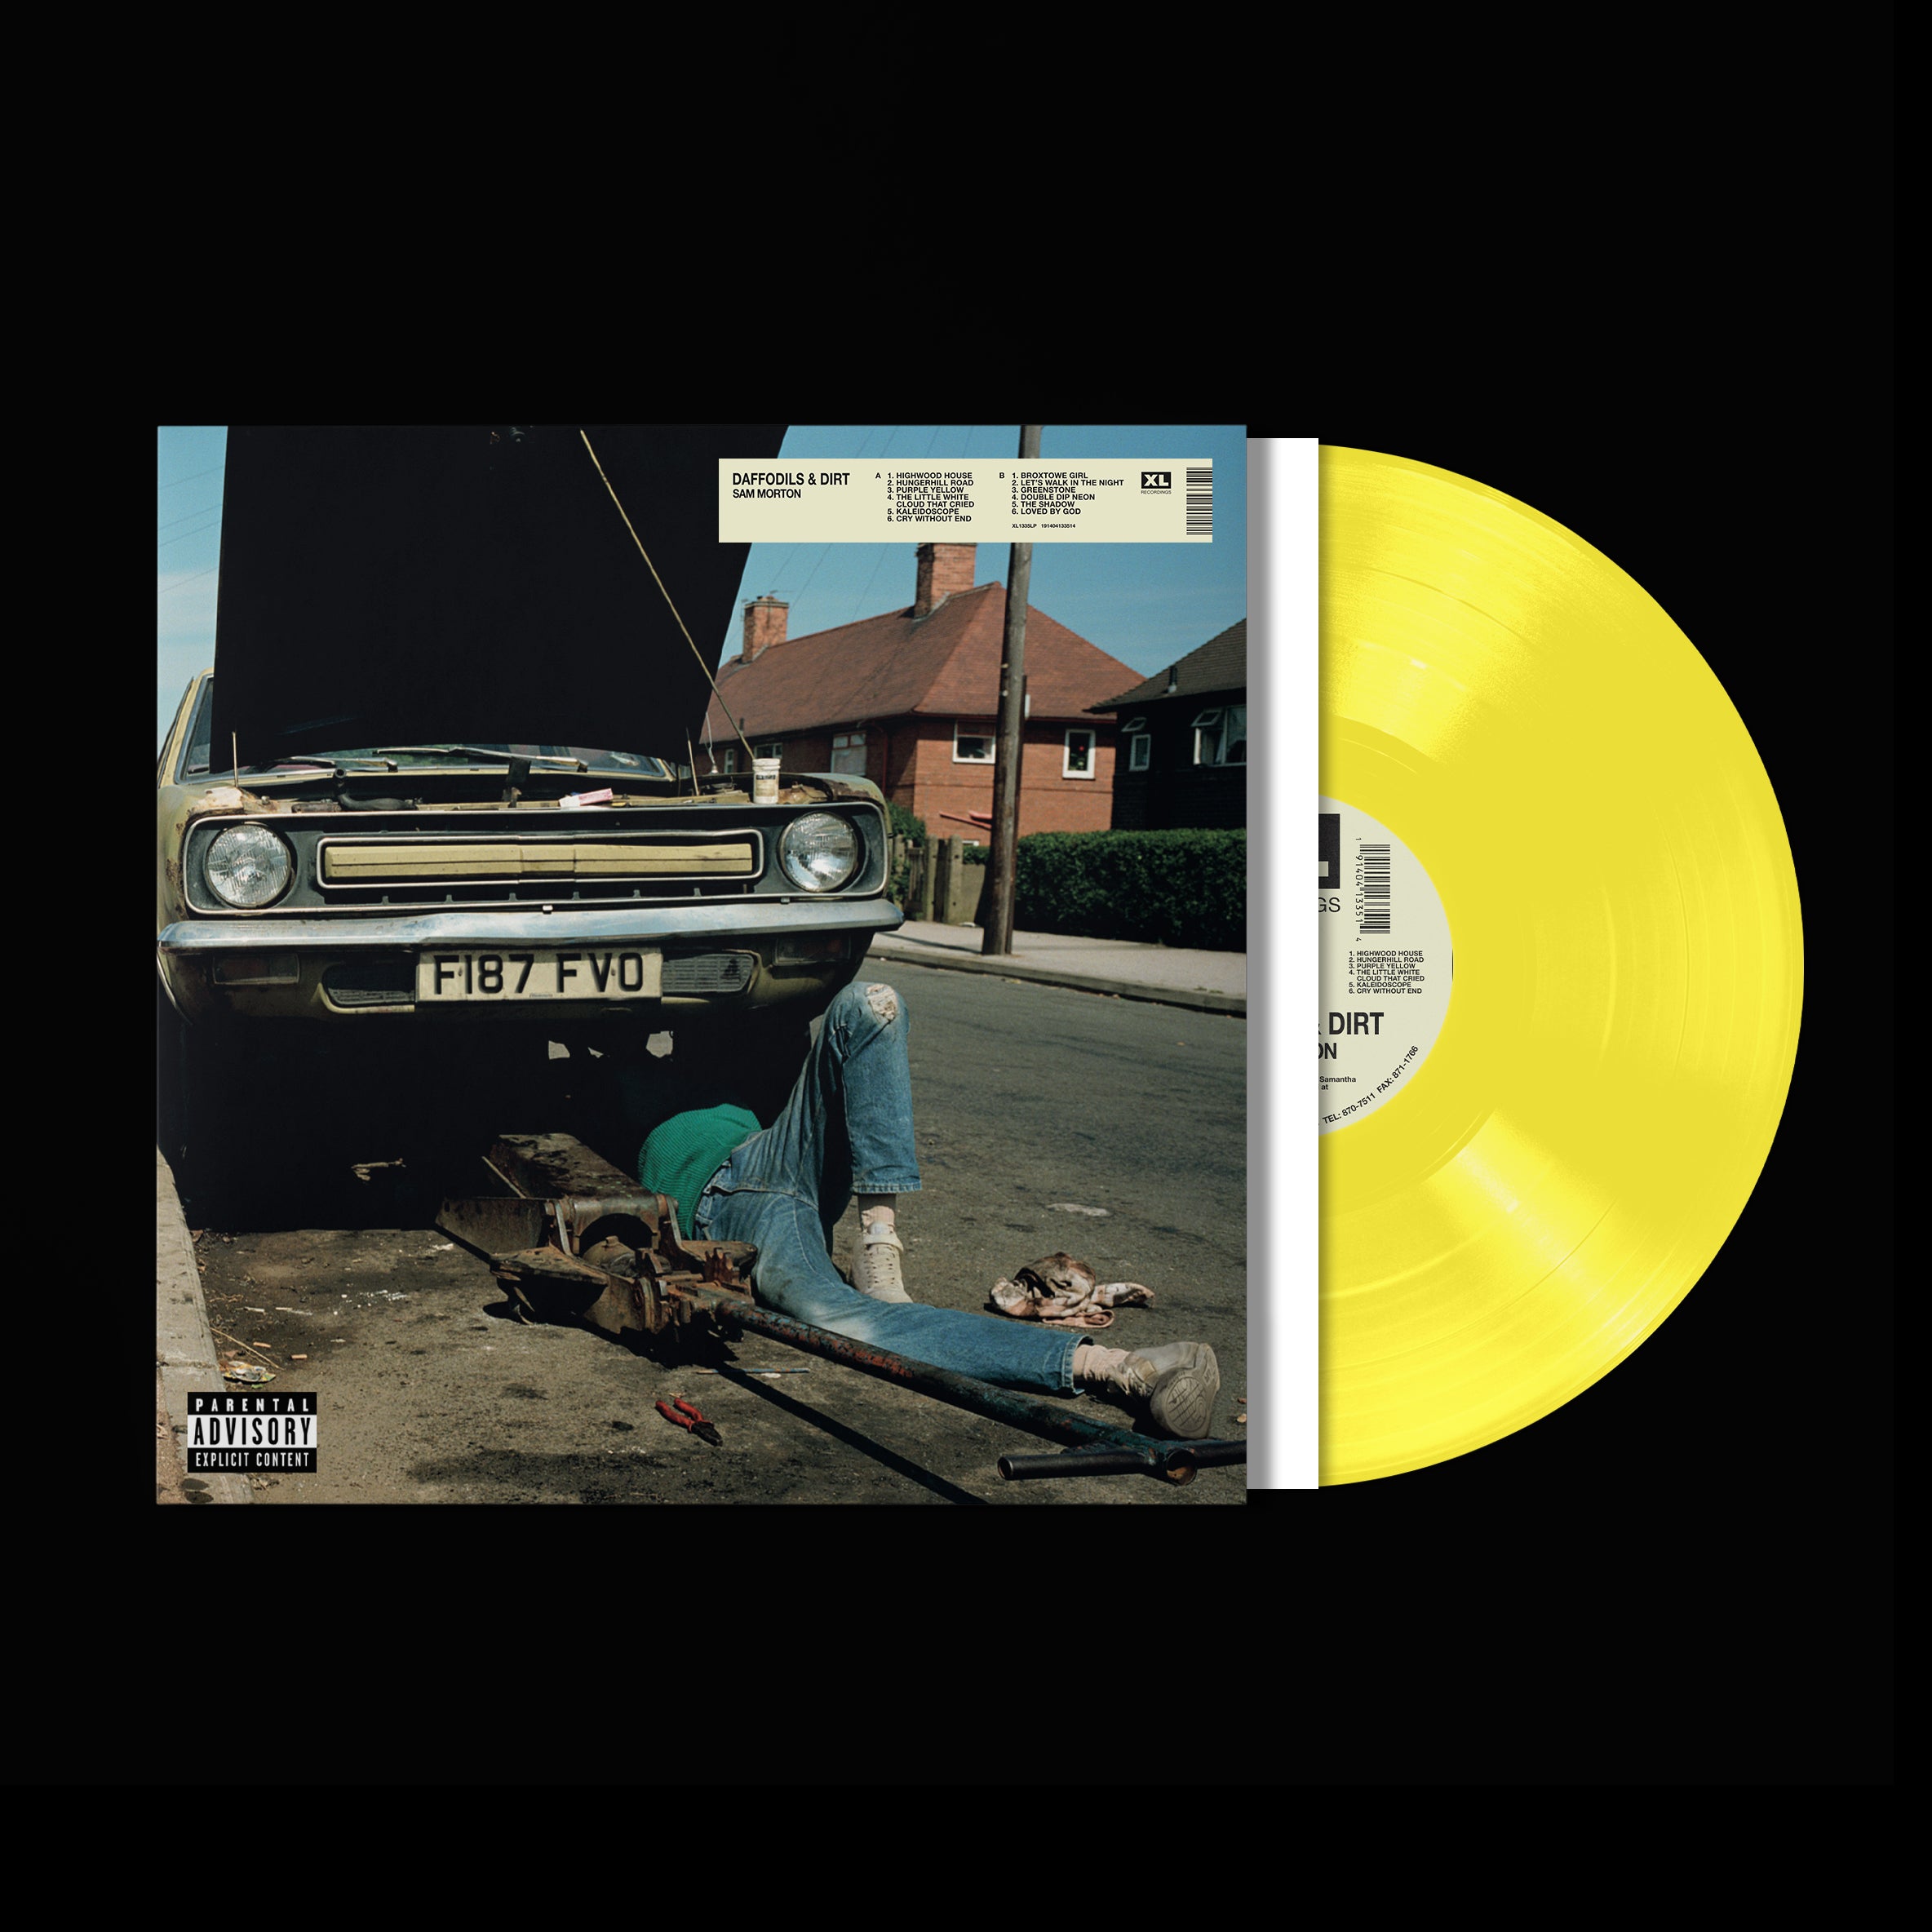 SAM MORTON - Daffodils & Dirt: Limited Yellow Vinyl LP